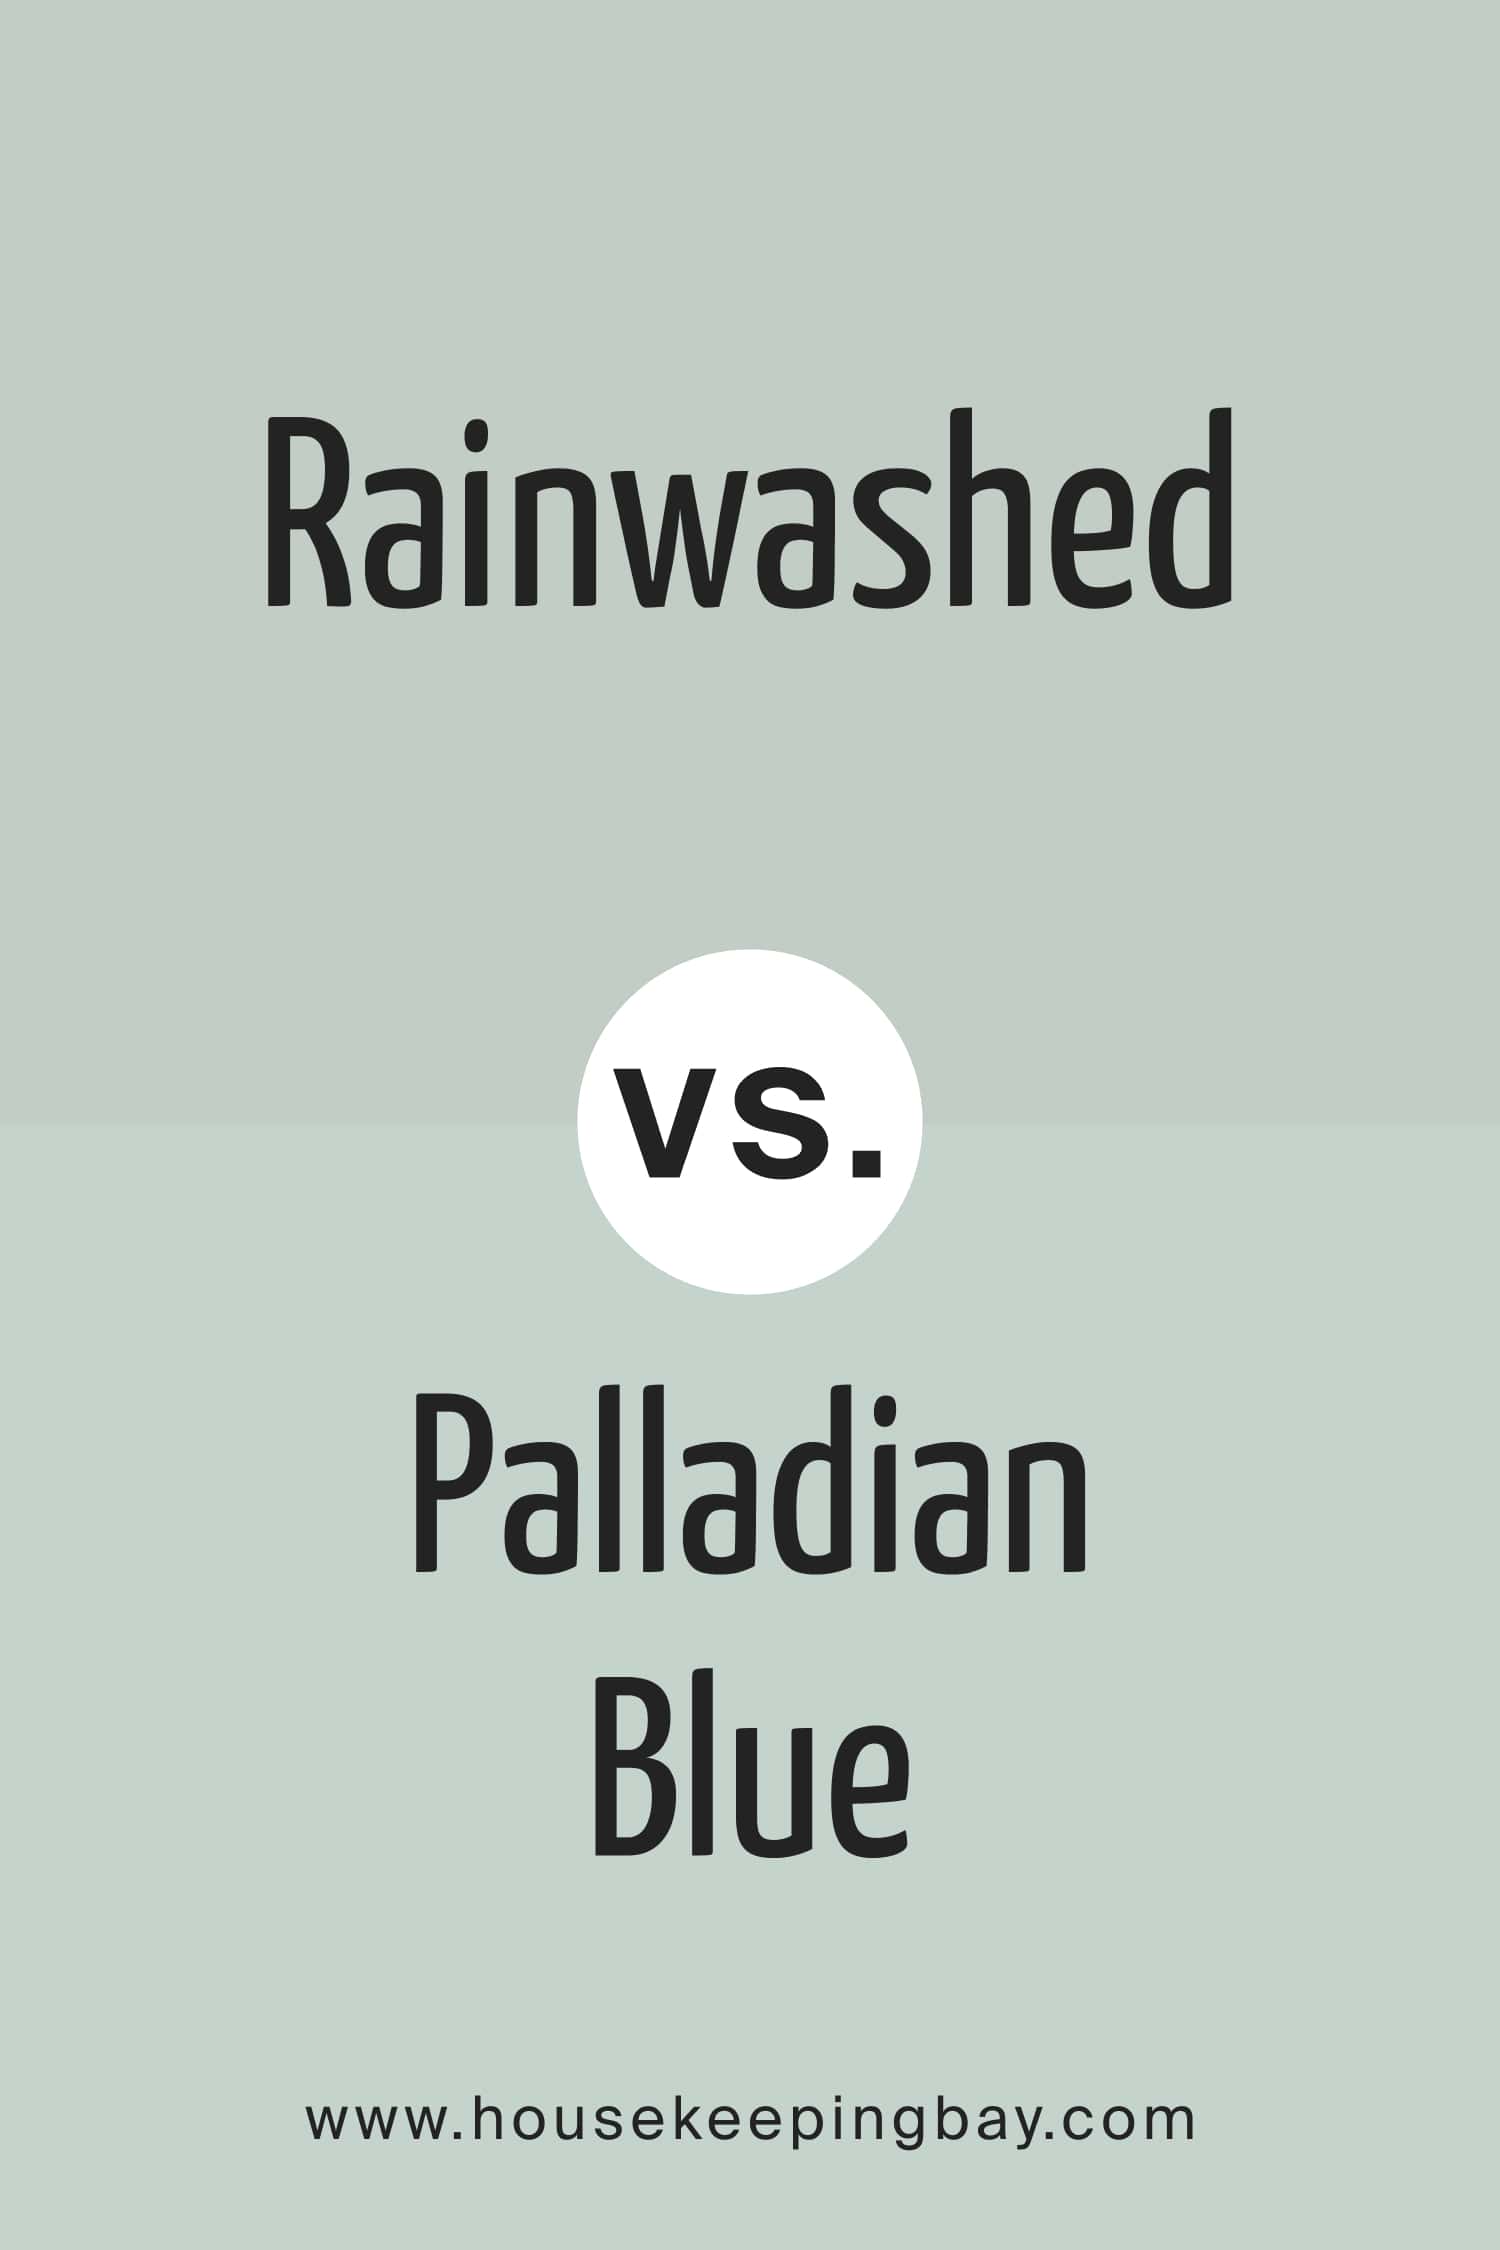 Rainwashed vs Palladian Blue